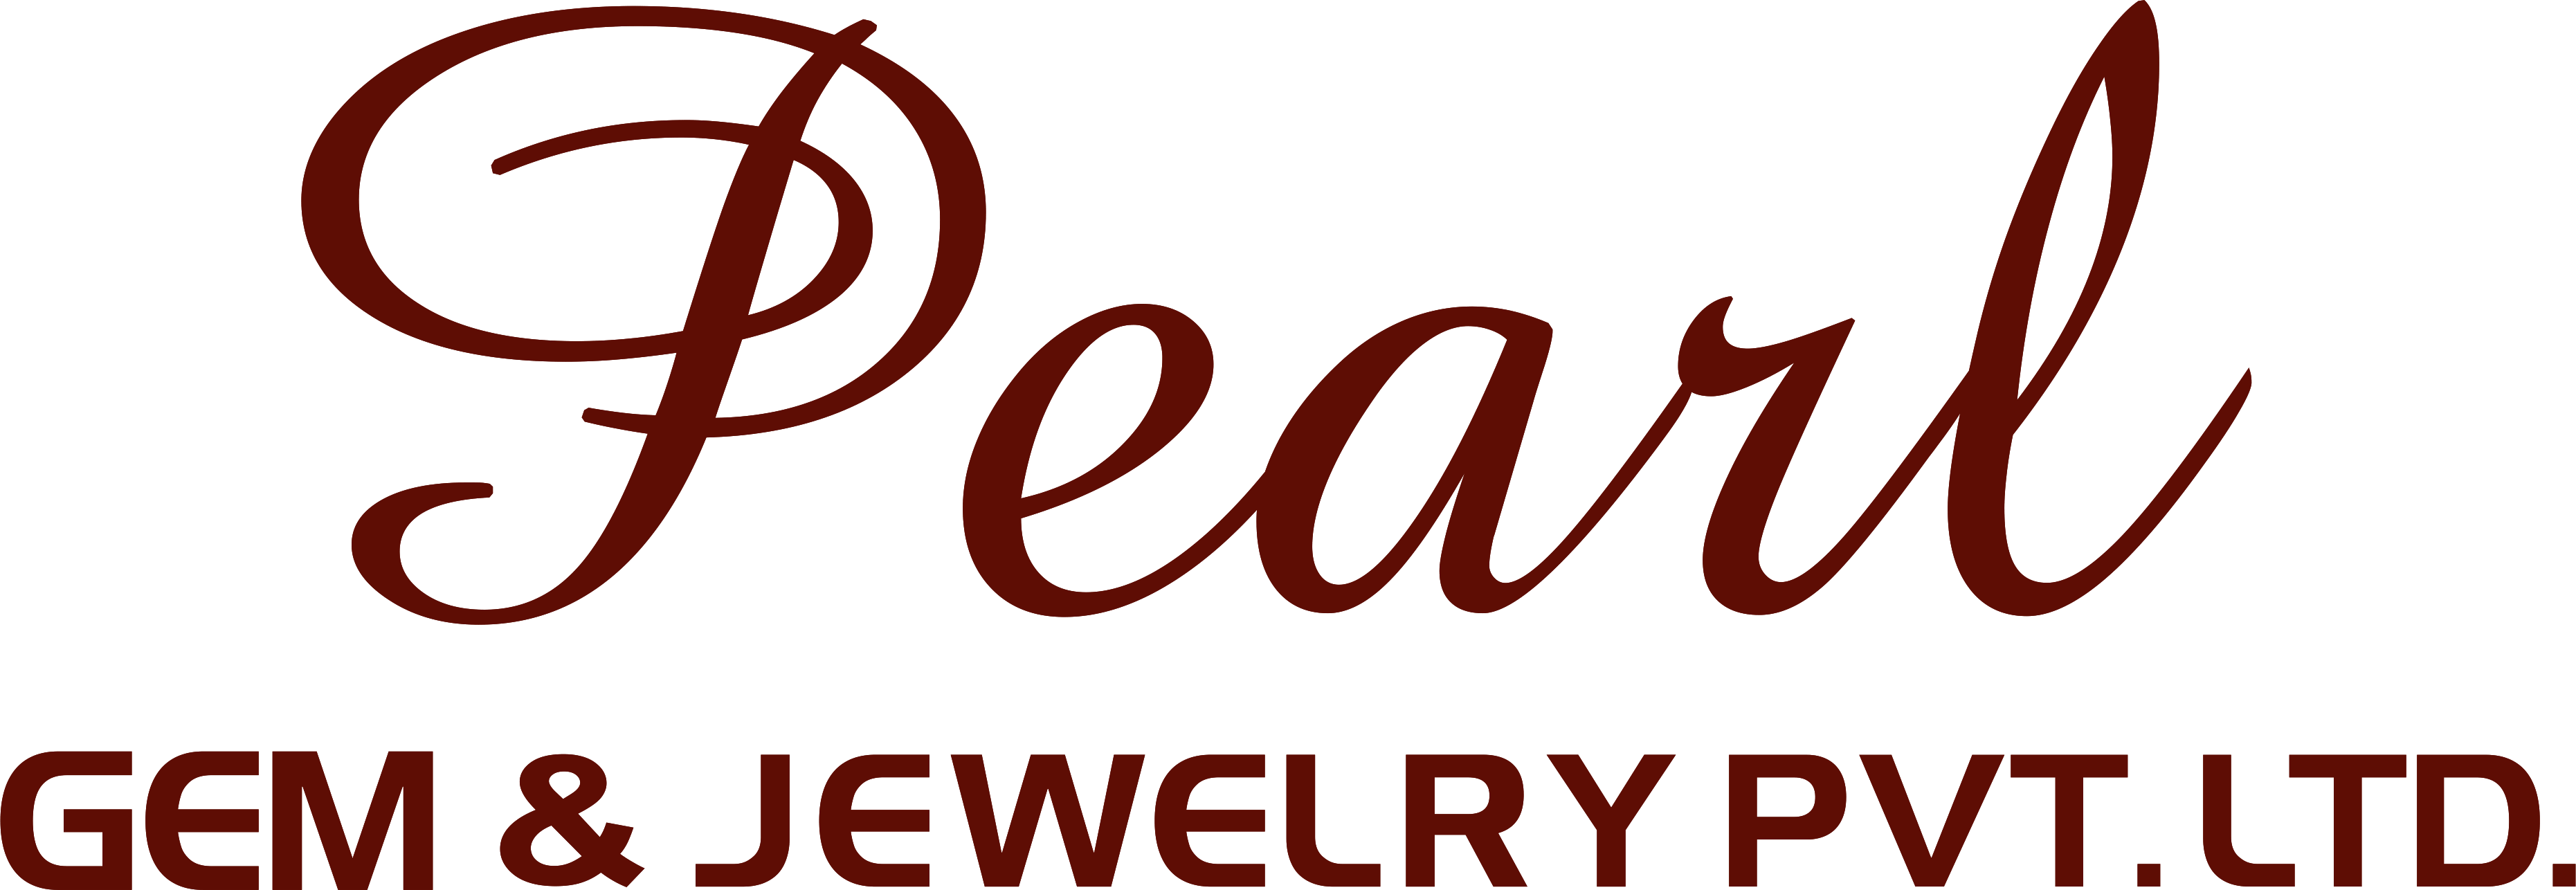 pearl-gem-jewelery